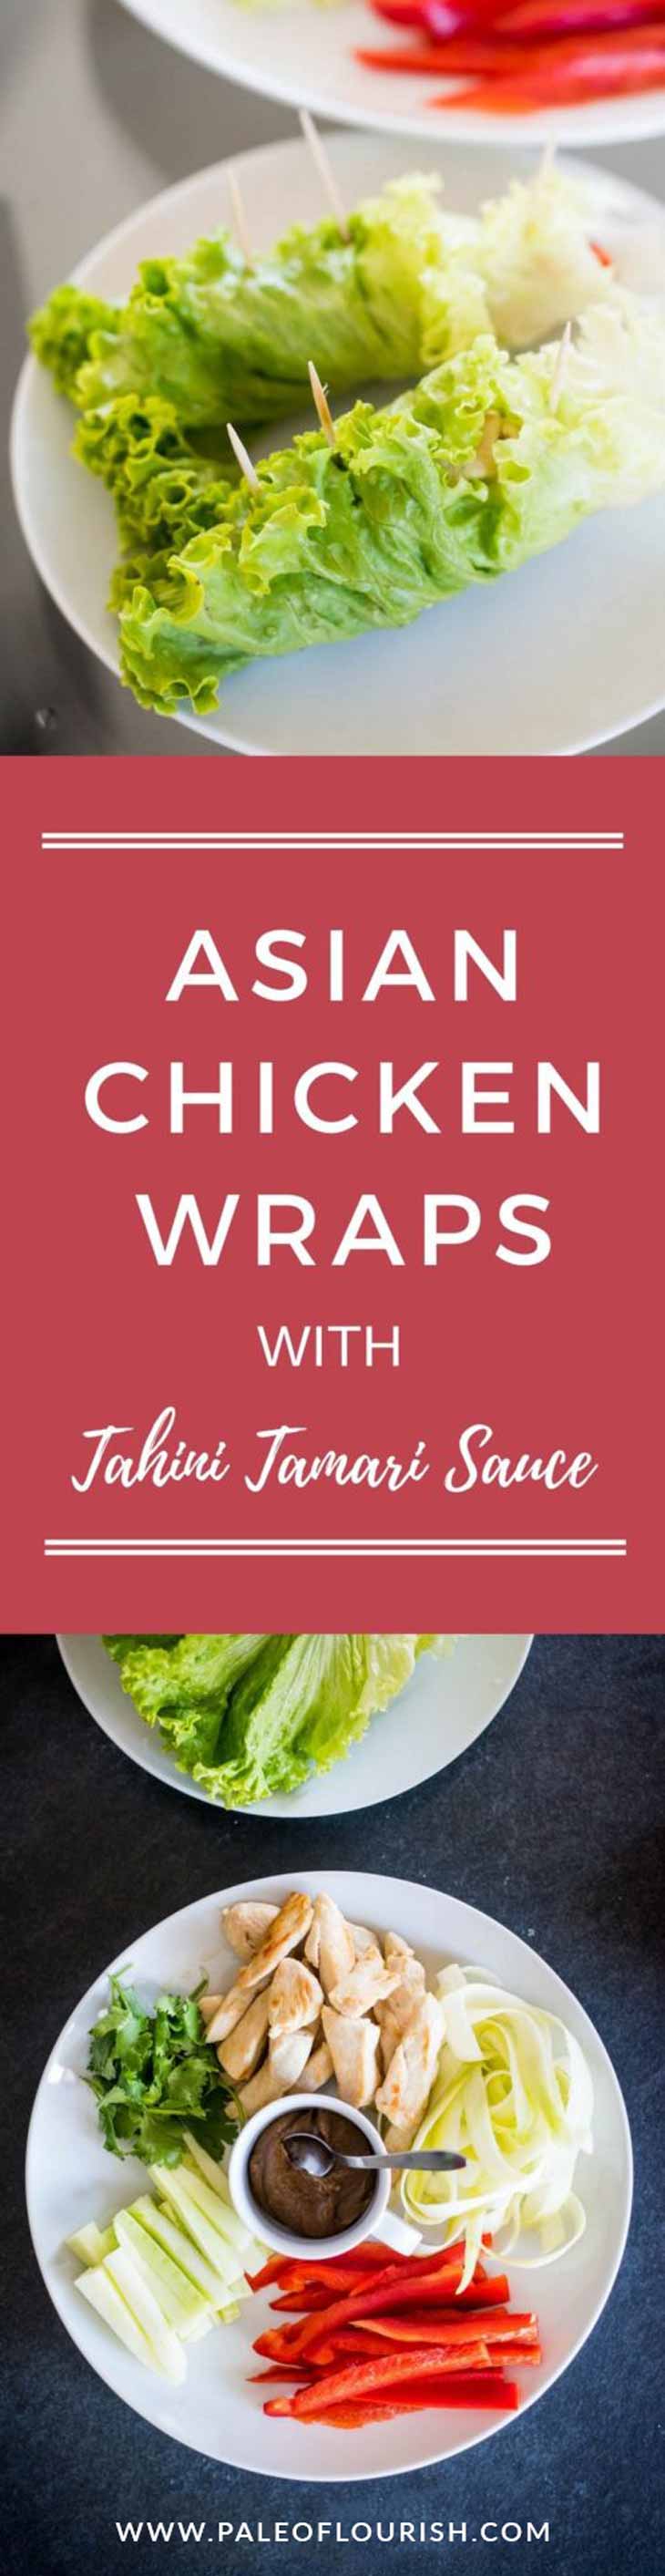 Asian Chicken Wraps with Tahini Tamari Sauce [Paleo, Keto] #paleo #keto #recipes -  https://paleoflourish.com/asian-chicken-wraps-recipe